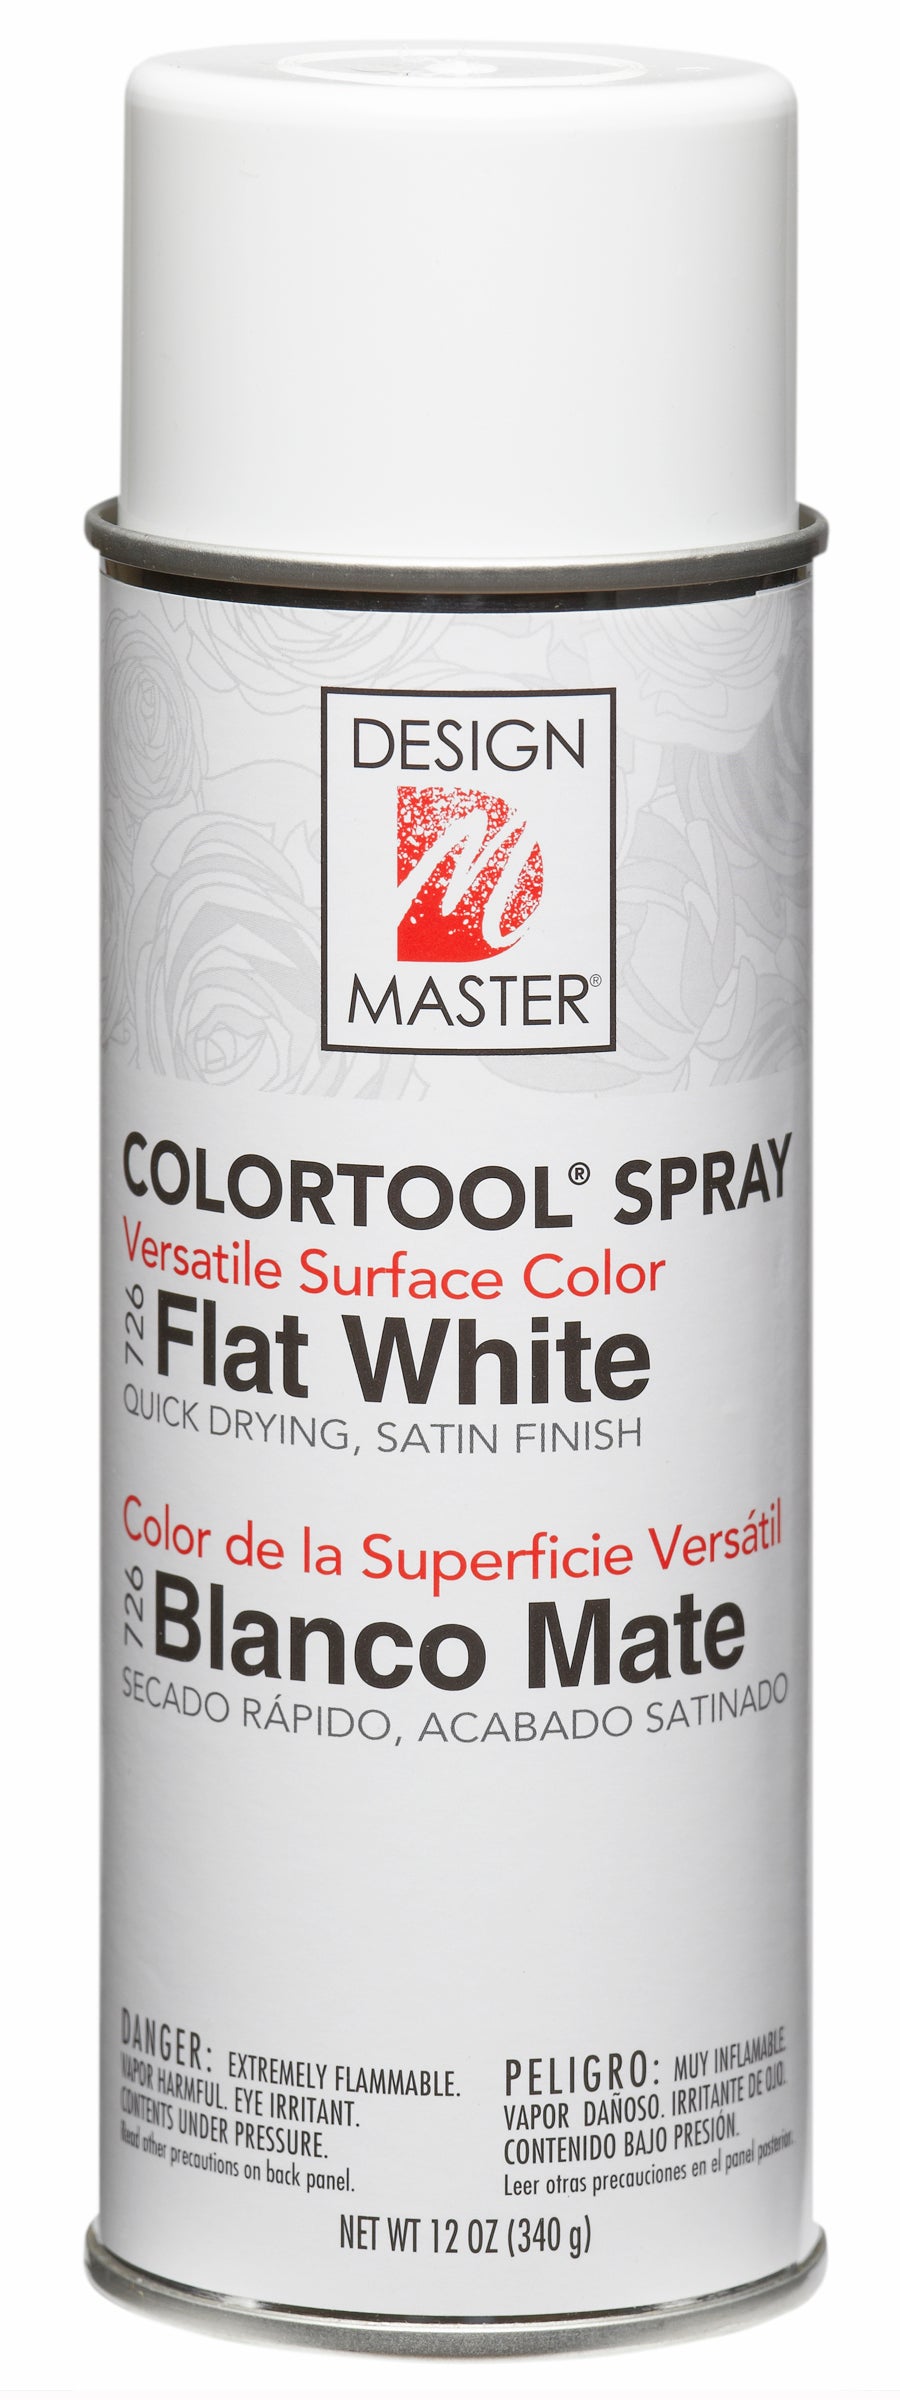 Design Master Colortool Spray-Flat White